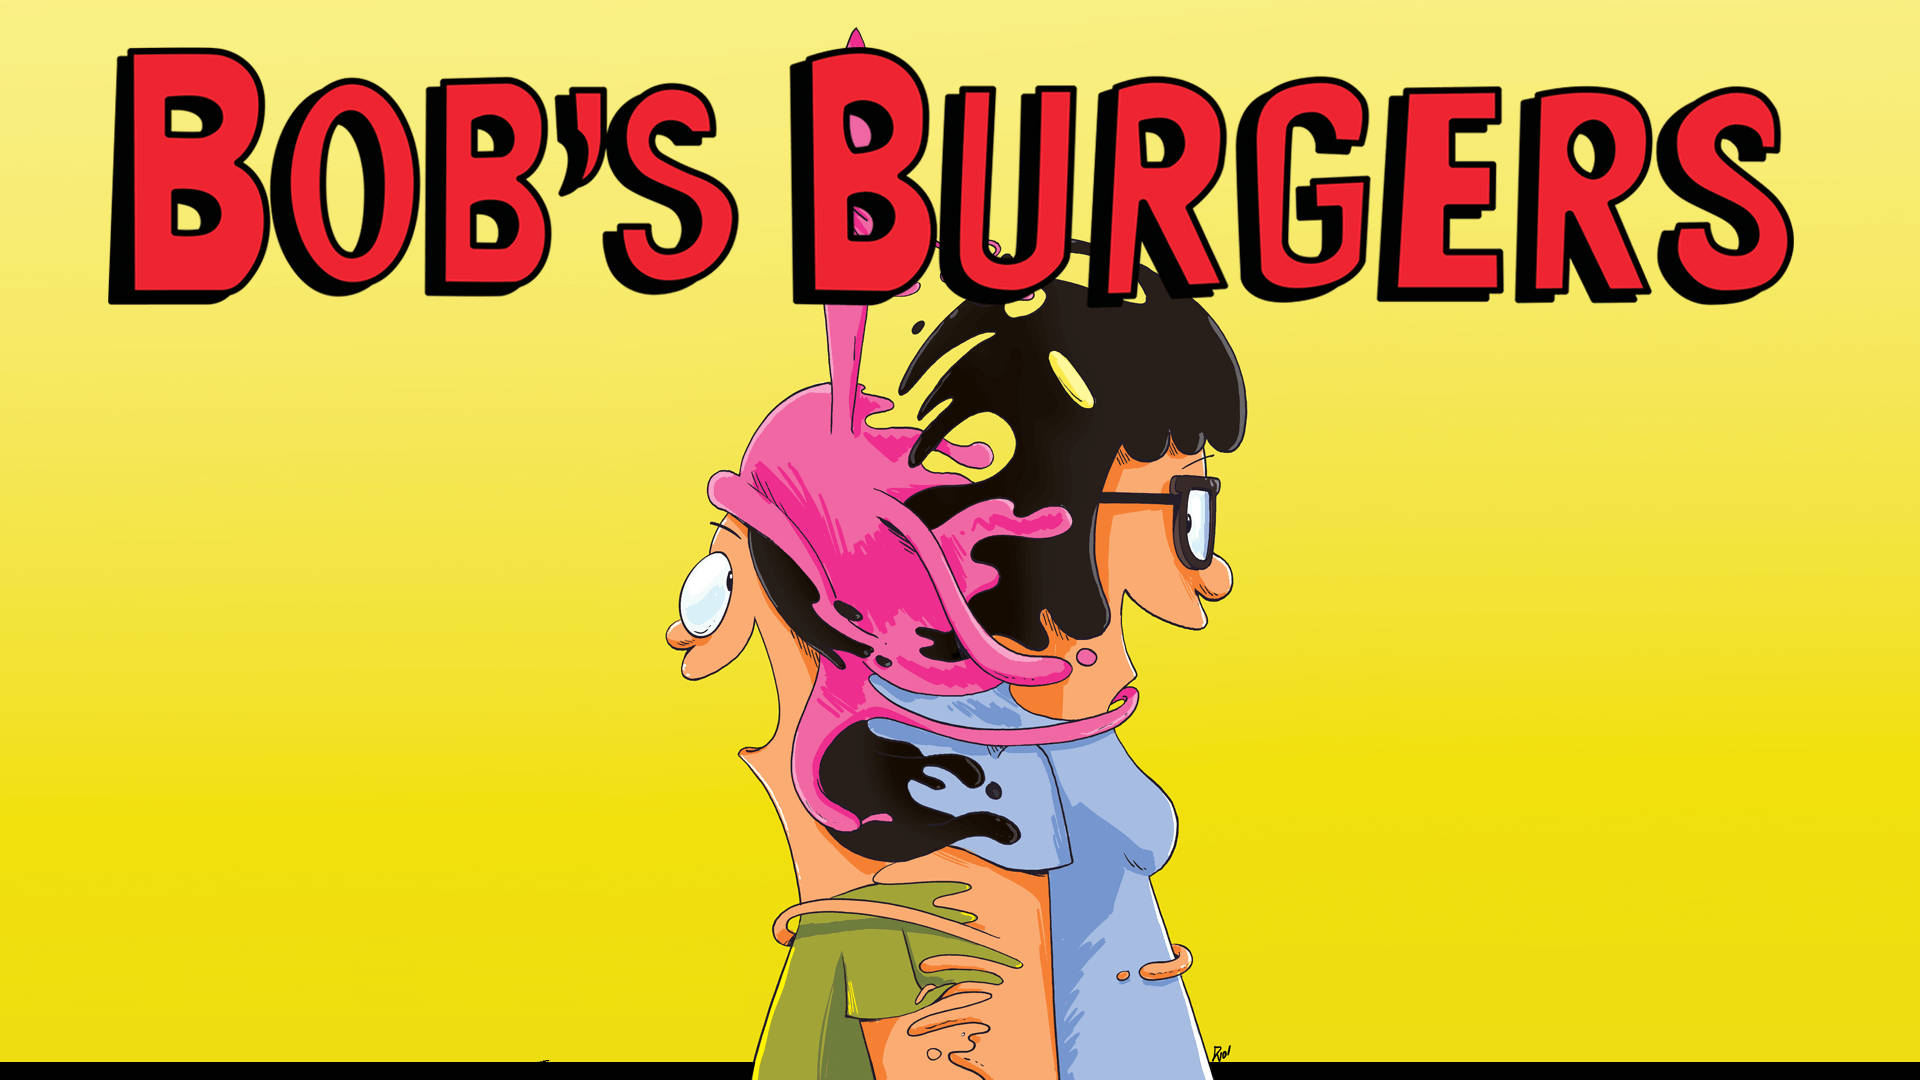 Louise Belcher, Bob's Burgers  Bobs burgers wallpaper, Bobs